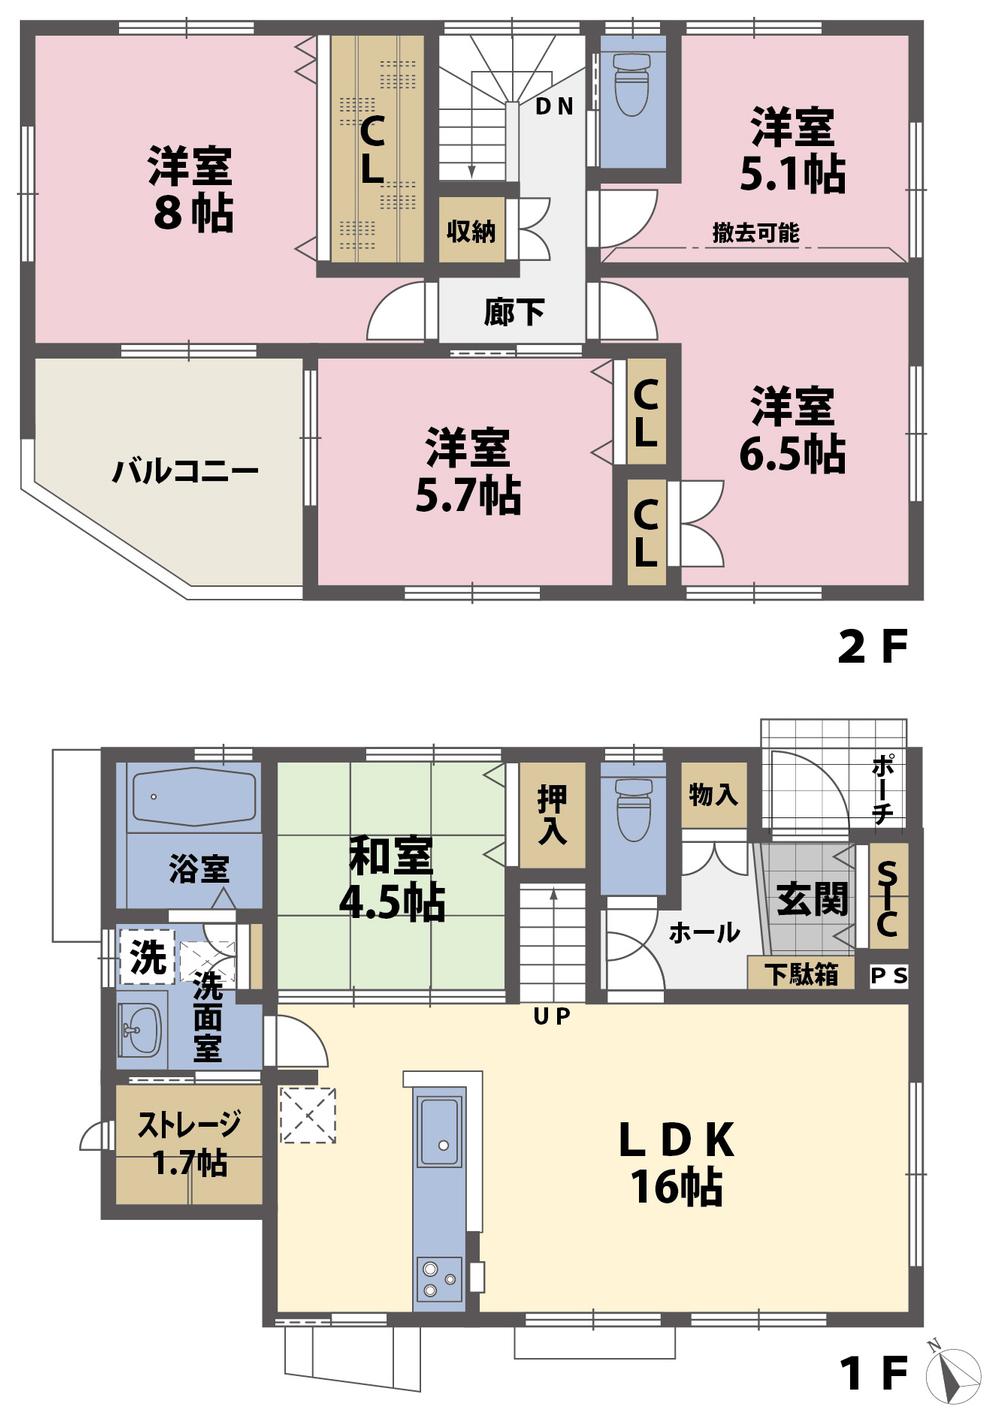 Floor plan. (No.3), Price 24,980,000 yen, 5LDK, Land area 134.2 sq m , Building area 106.78 sq m